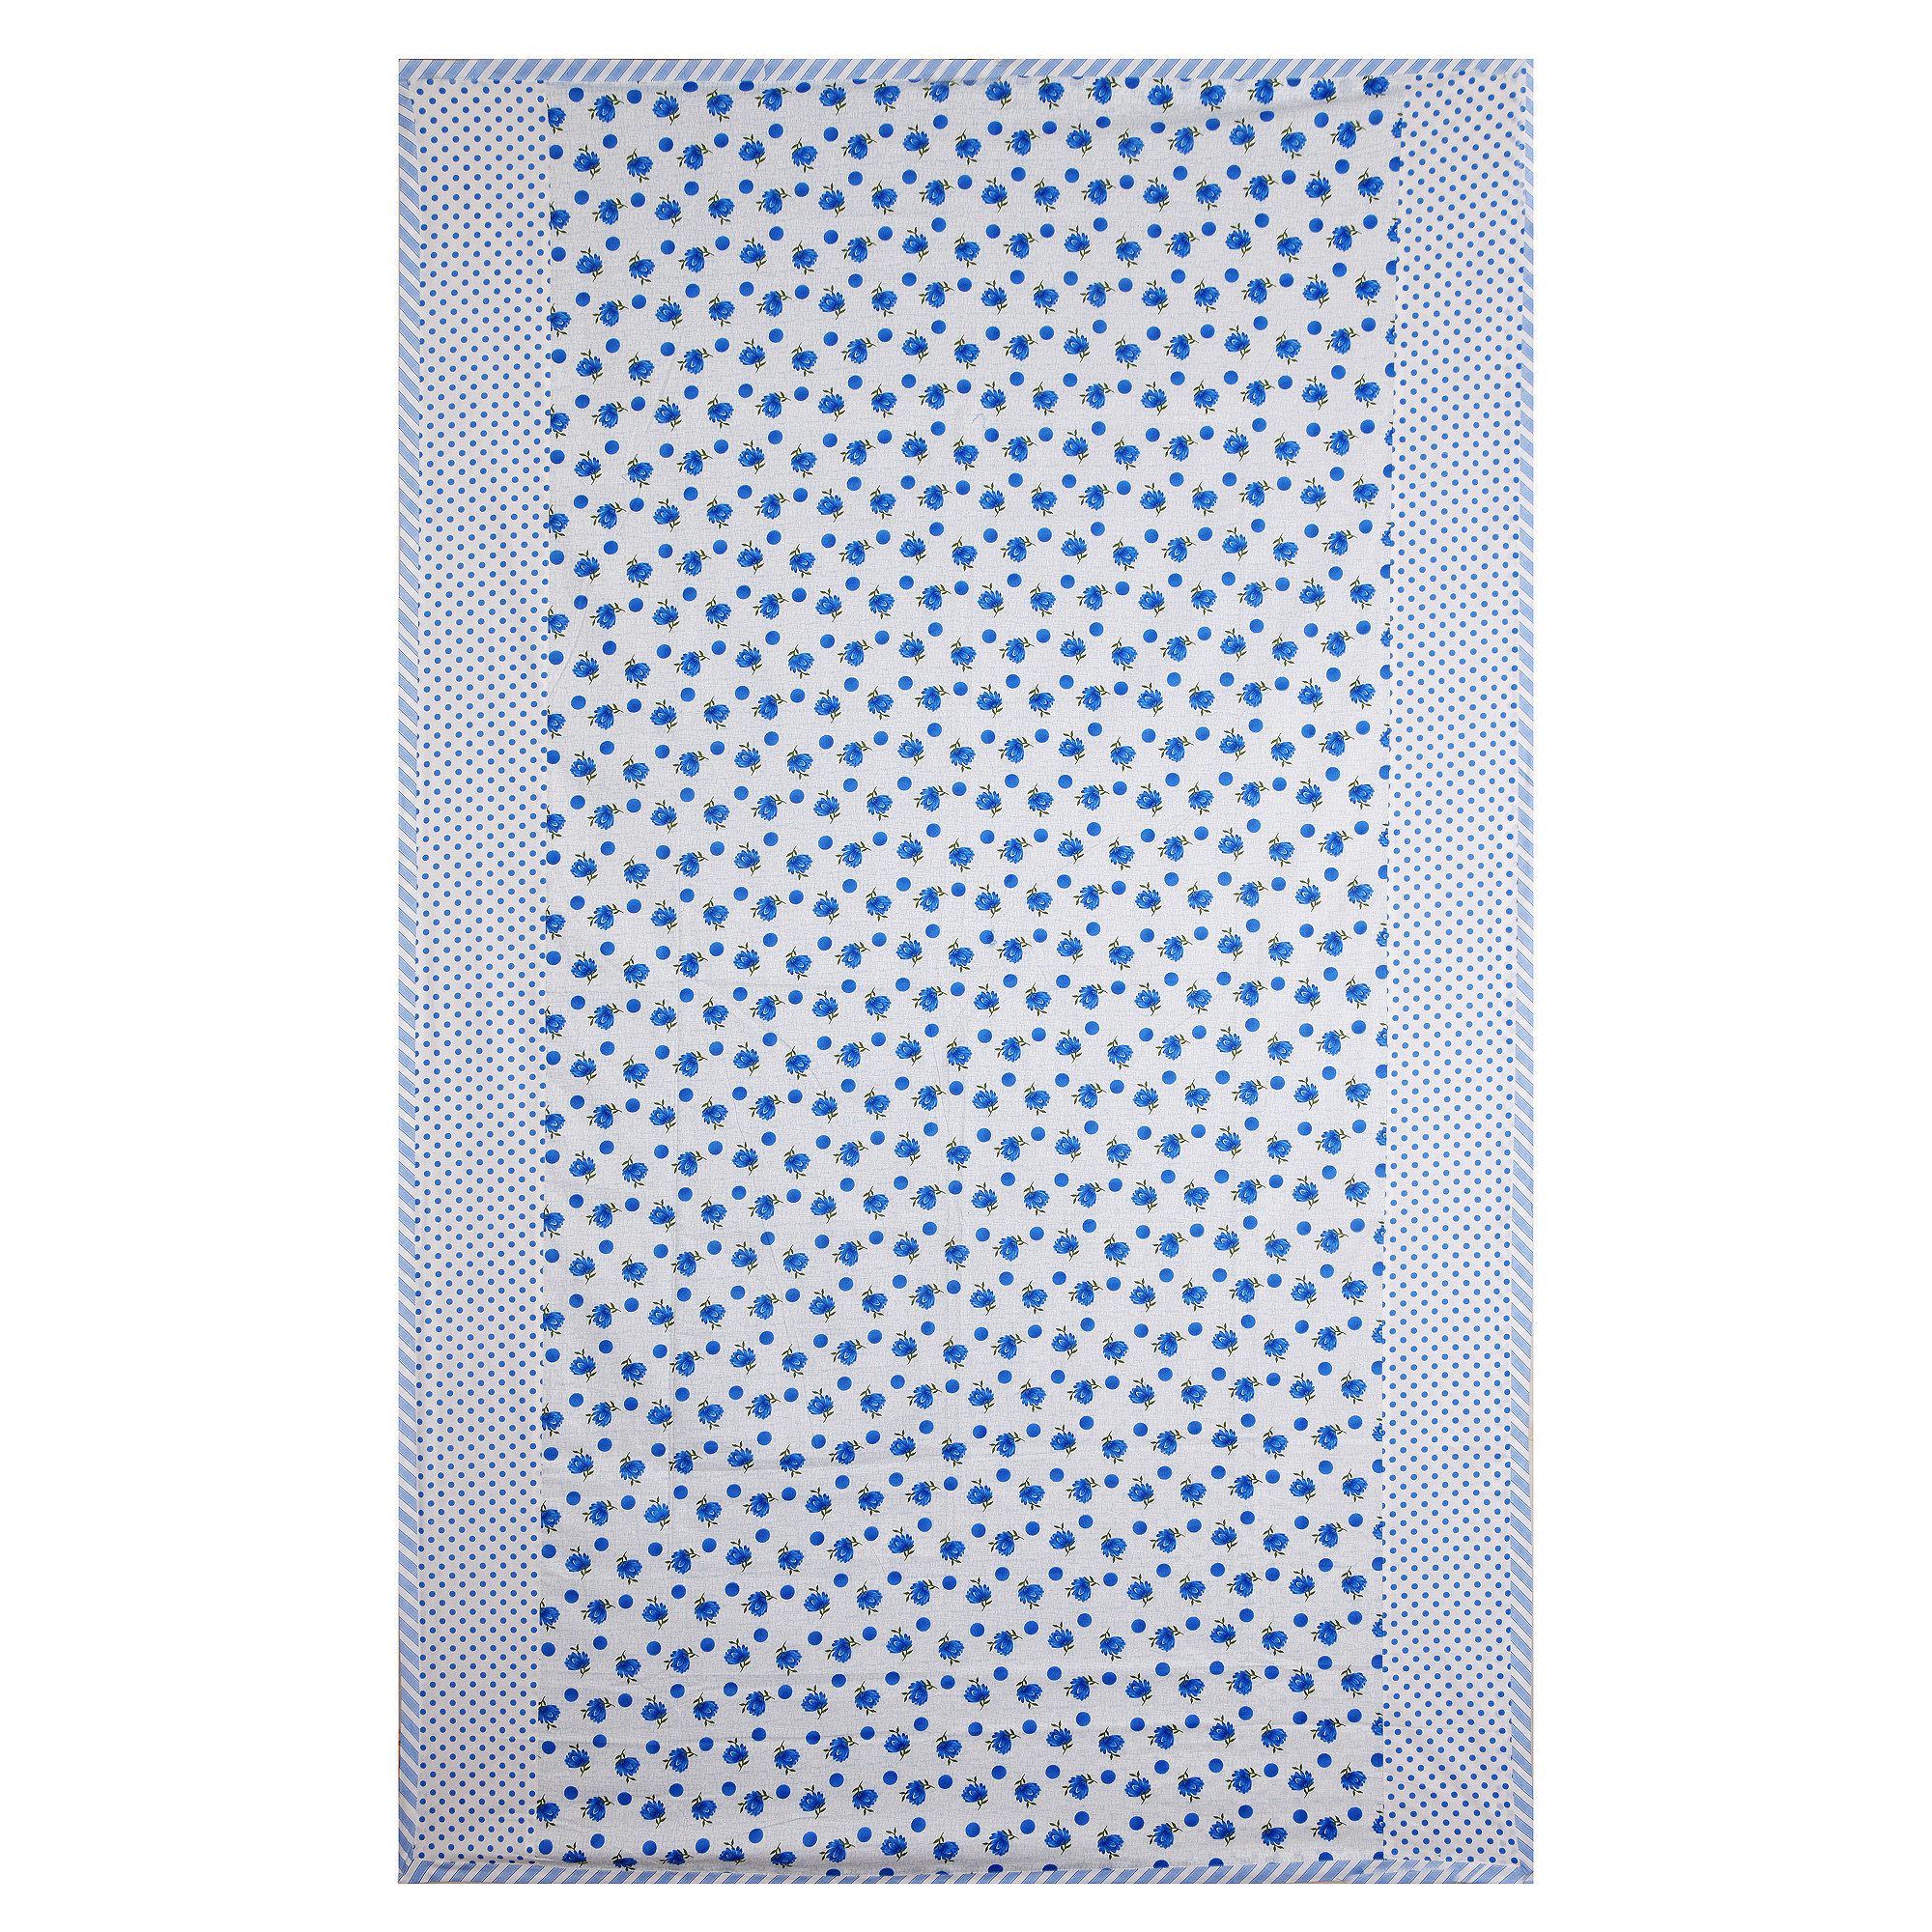 Kuber Industries Flower Design Pure Cotton Soft Light Weight  All Season Single Bed Top  Sheet, Summer Quilt, Cotton Blanket,Dohar, Chadar (Blue)-HS_38_KUBMART21117